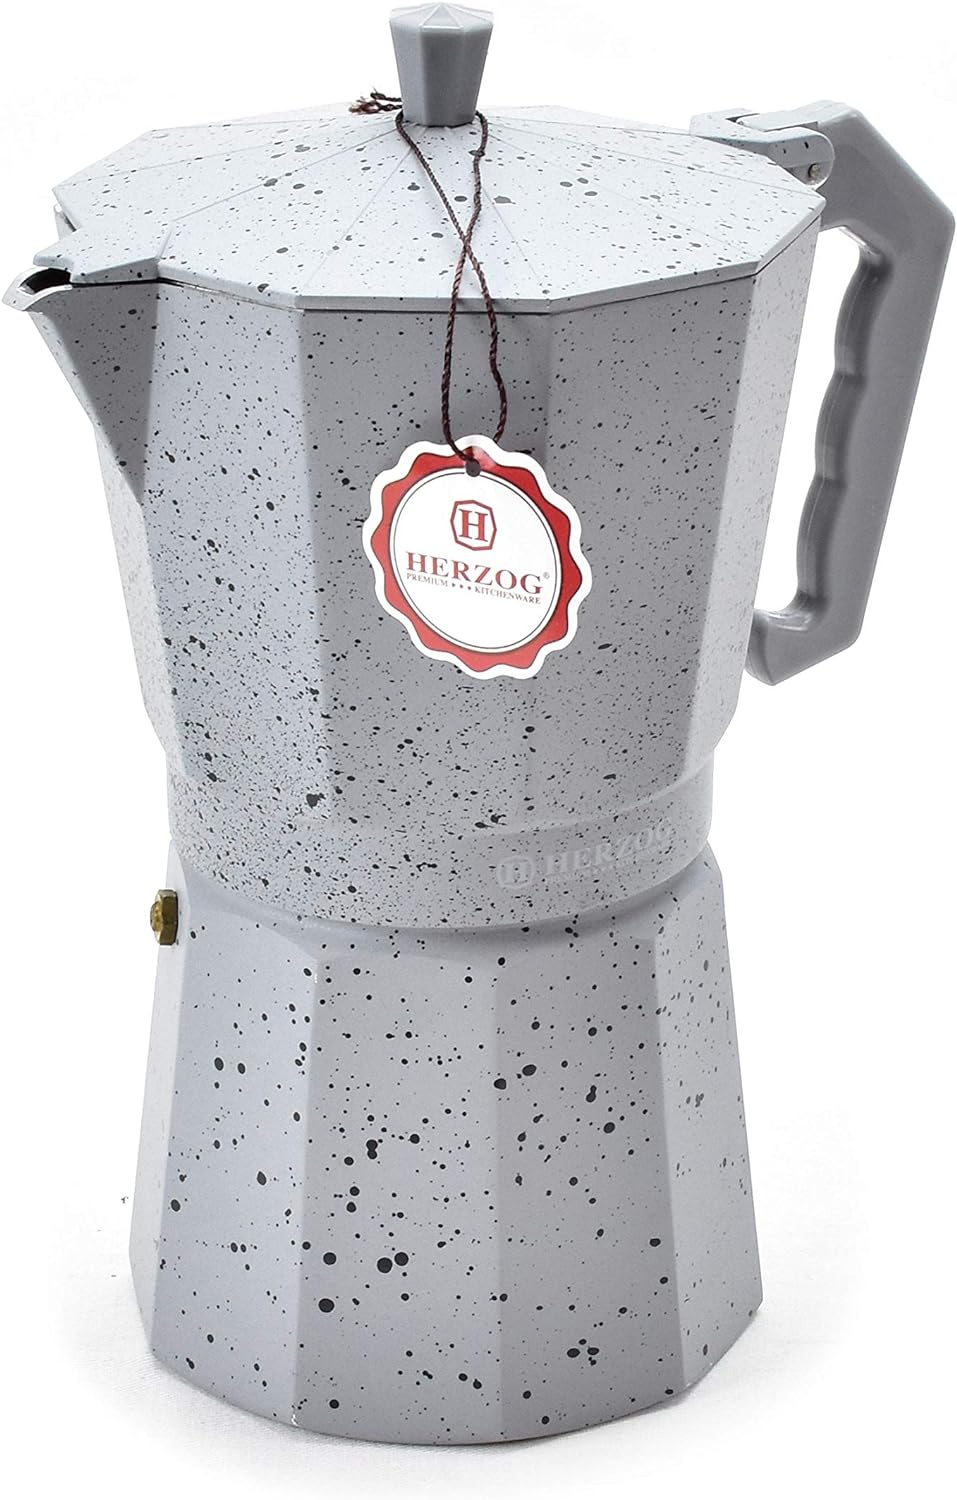 Herzog® Premium Espresso Maker, Coffee Maker, Mocha Cooker, 6-12 Cups (12 Cups, Gray)